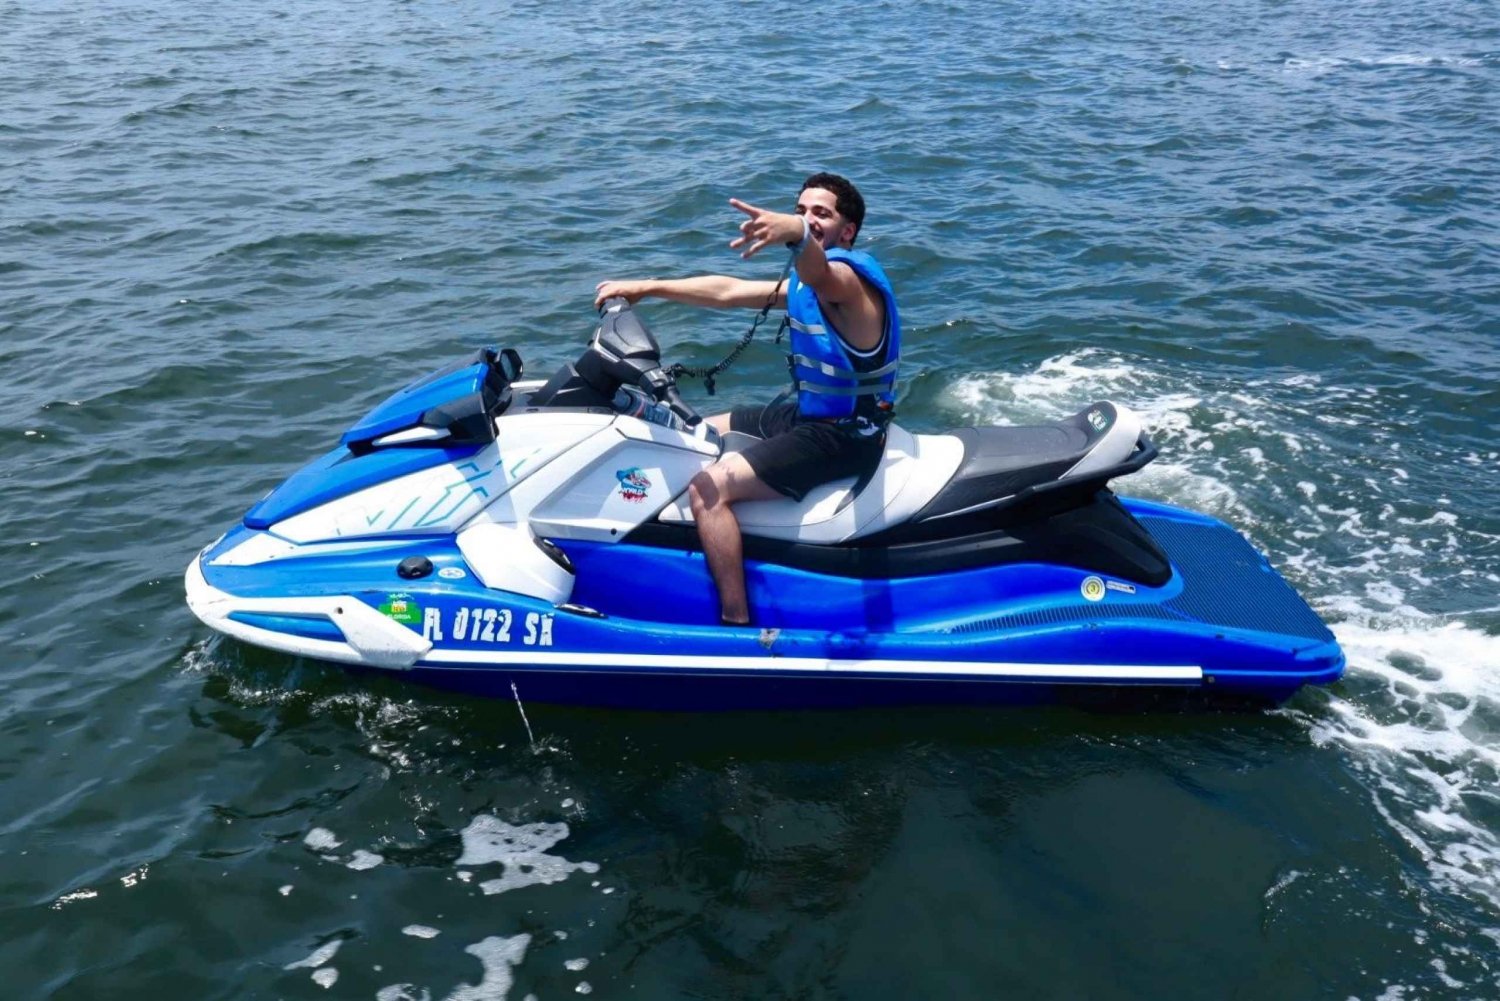 Miami Beach Jetskis + Free Boat Ride